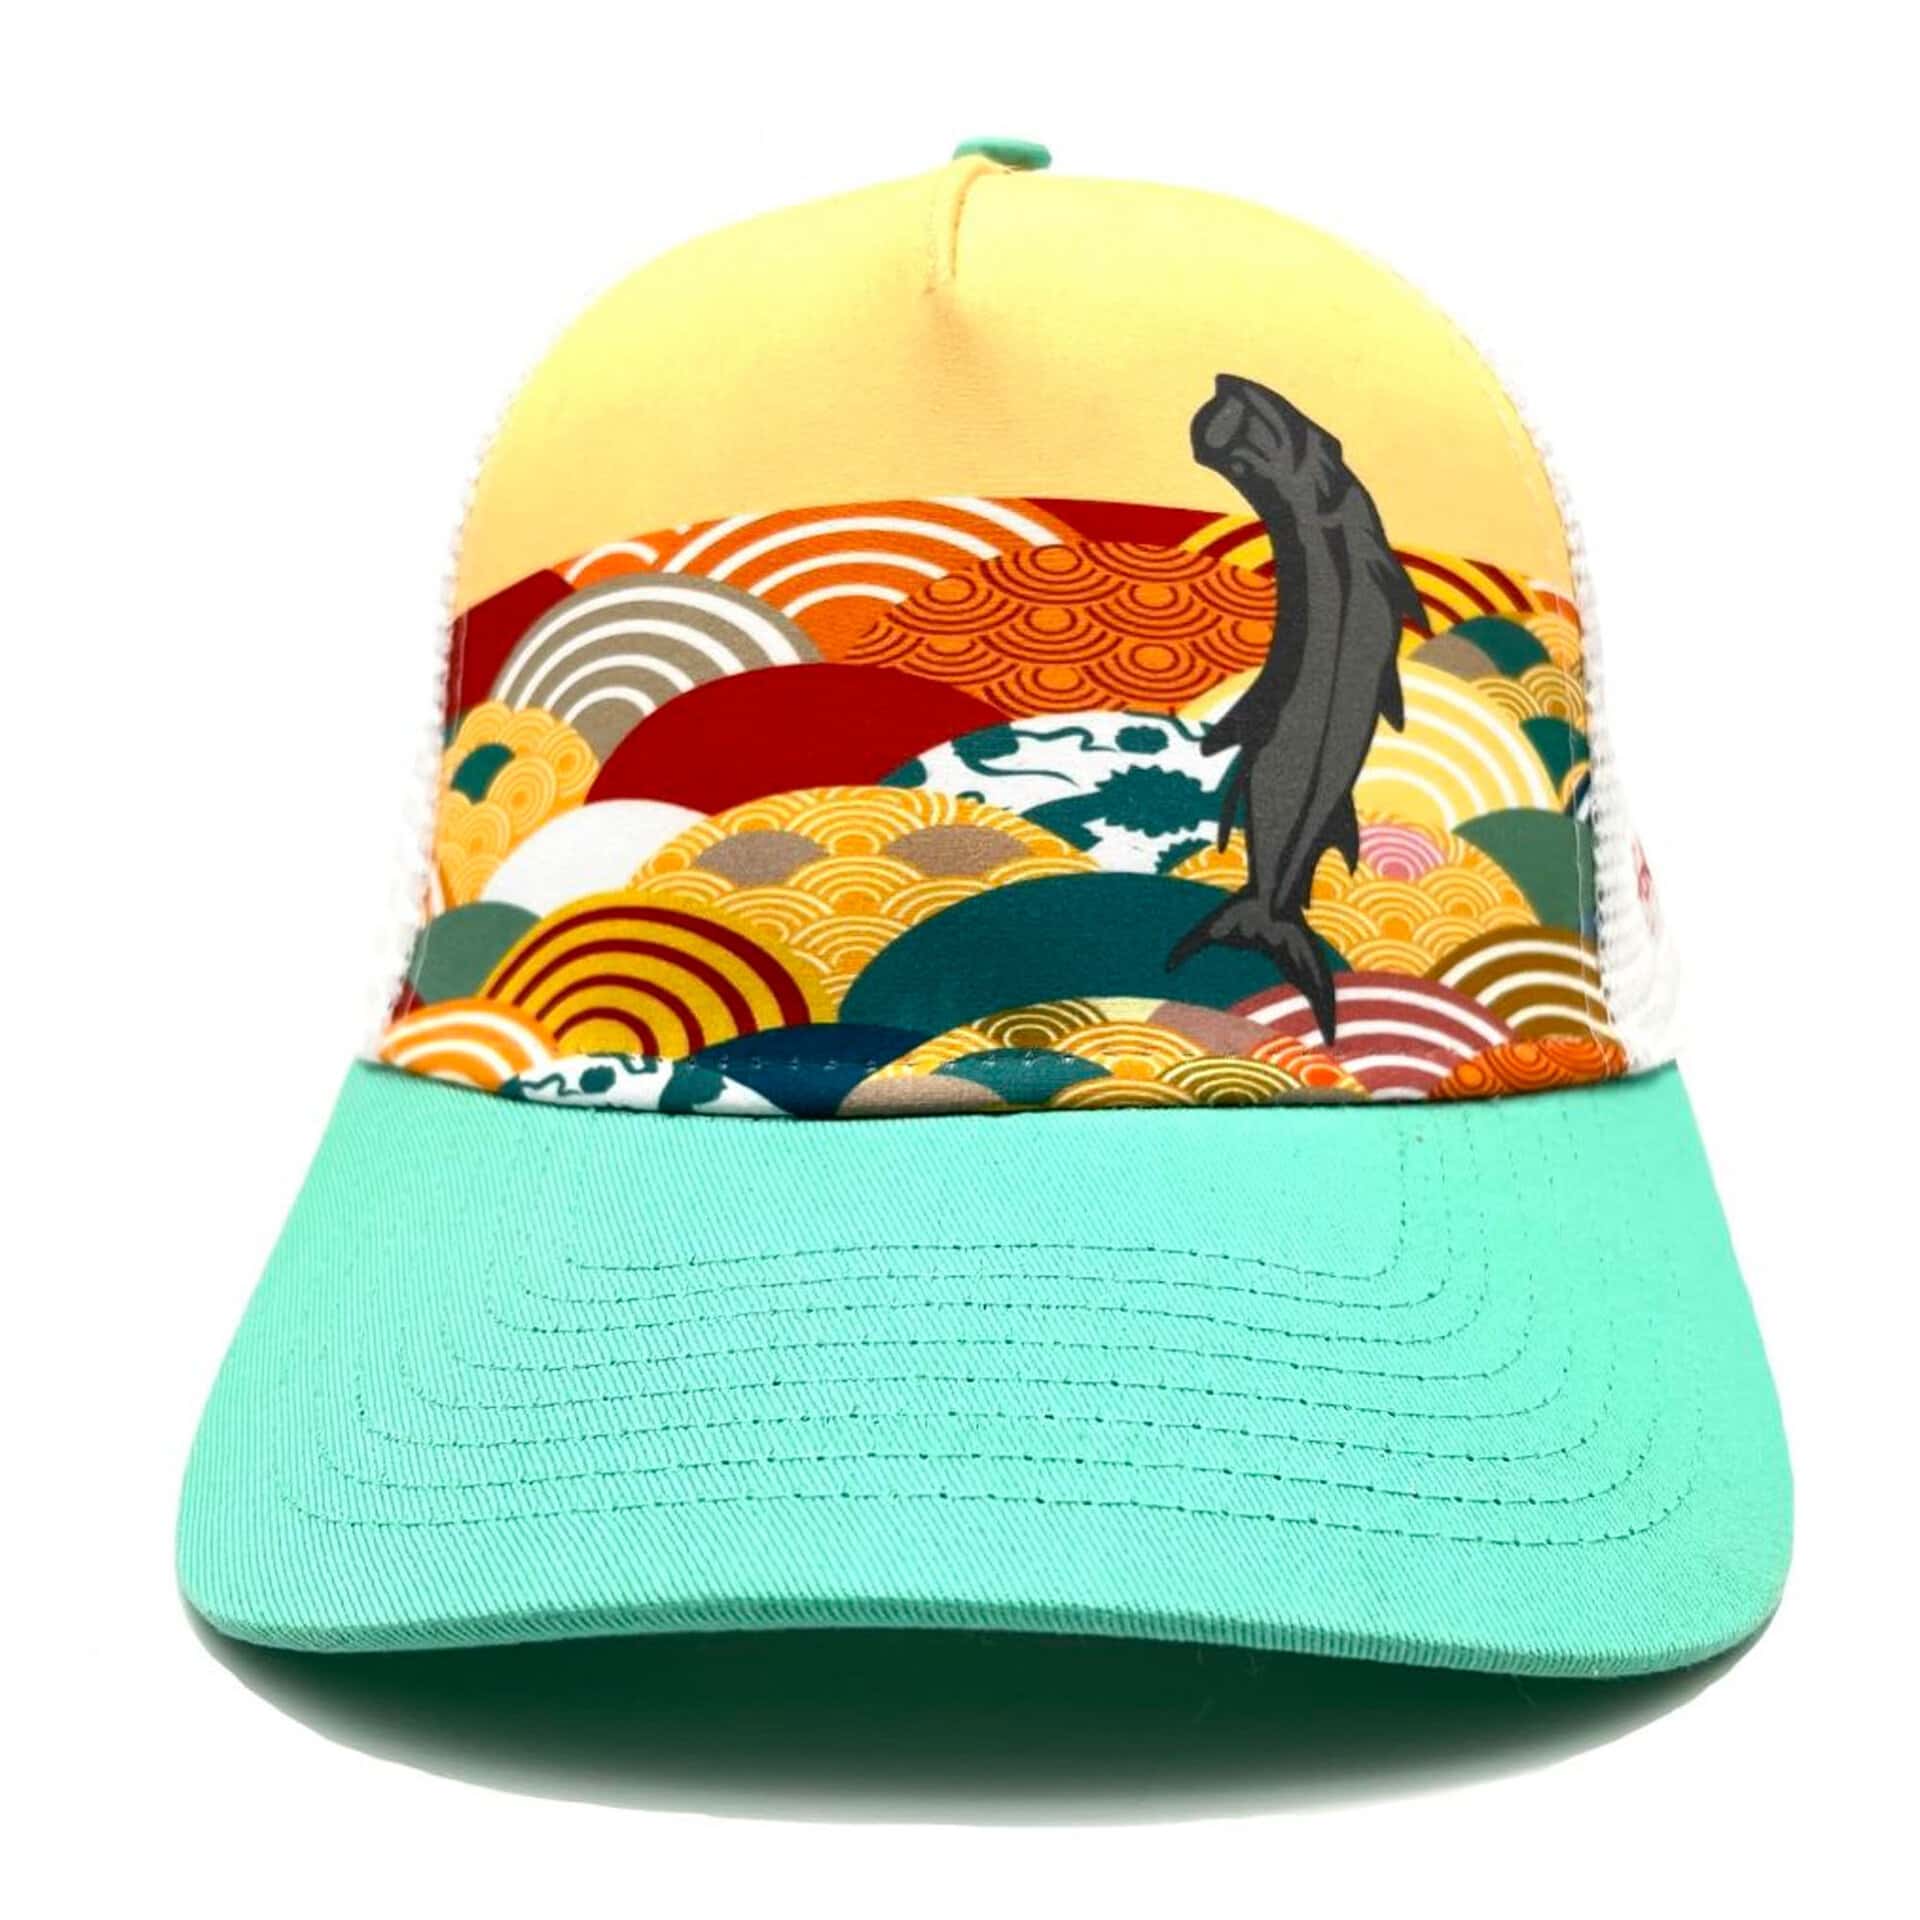 Scott Tarpon Jumping In Colorful Waves